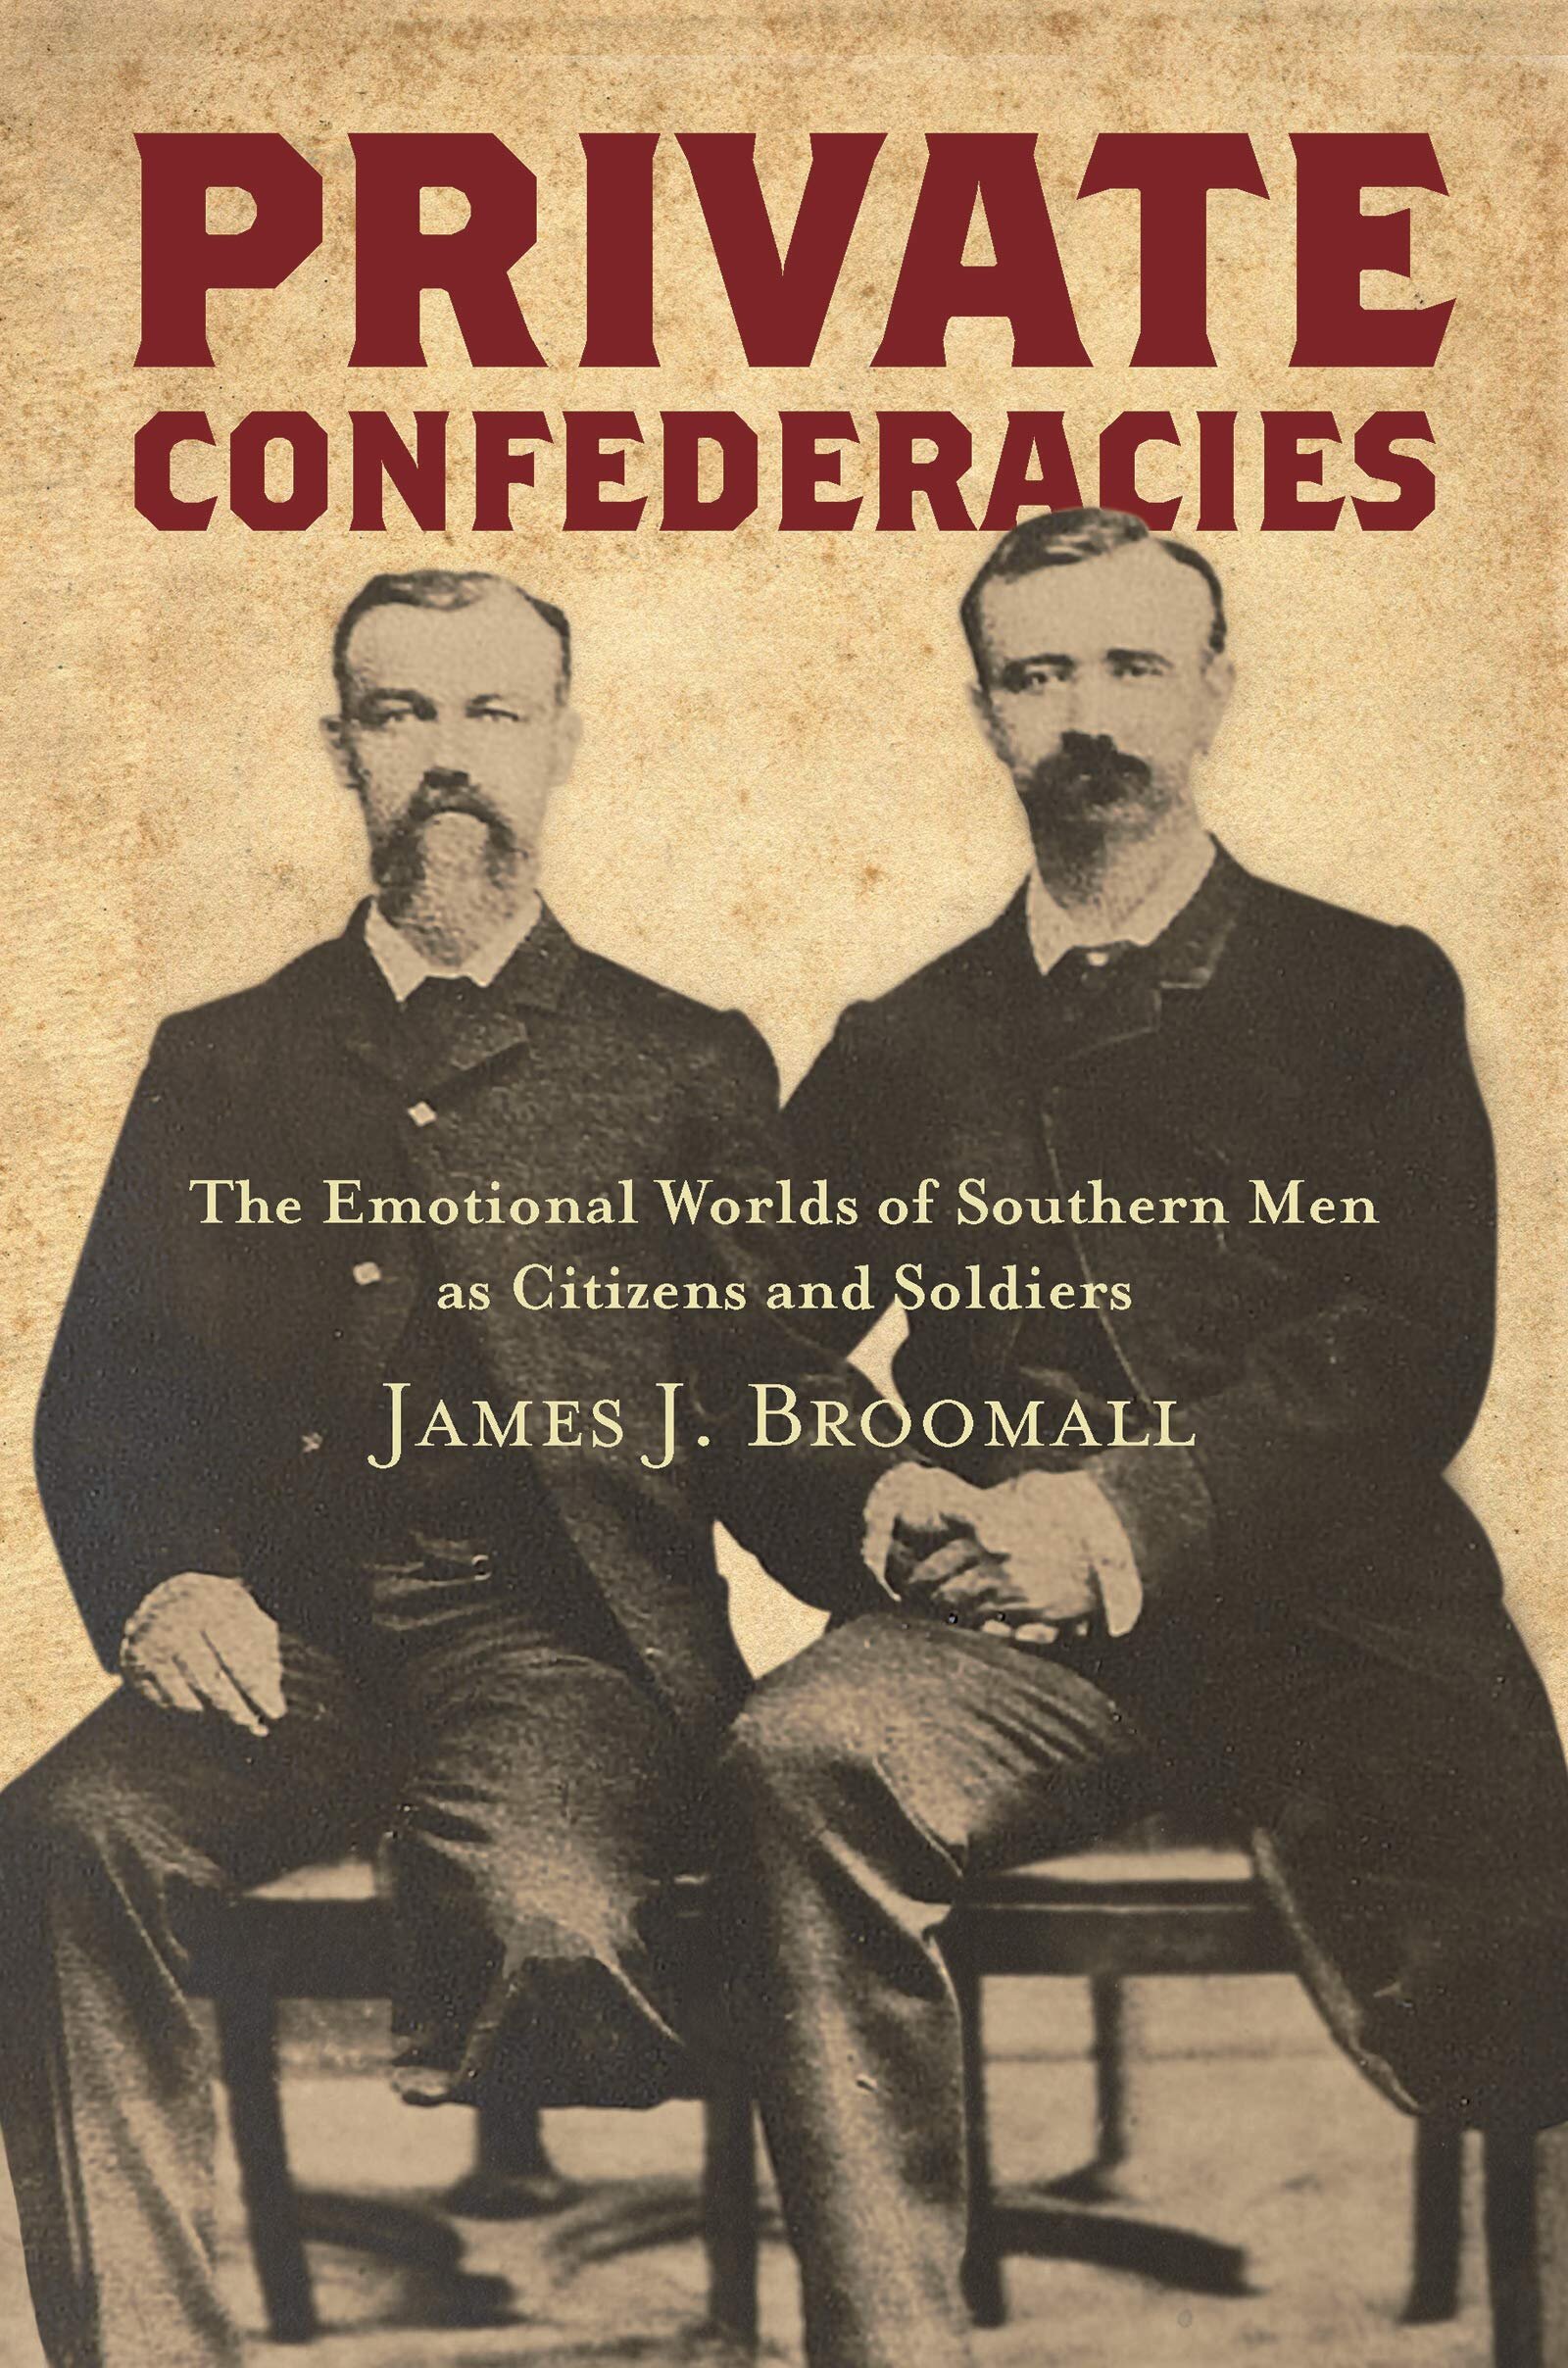 Civil War Monitor - Private Confederacies (James J. Broomall)